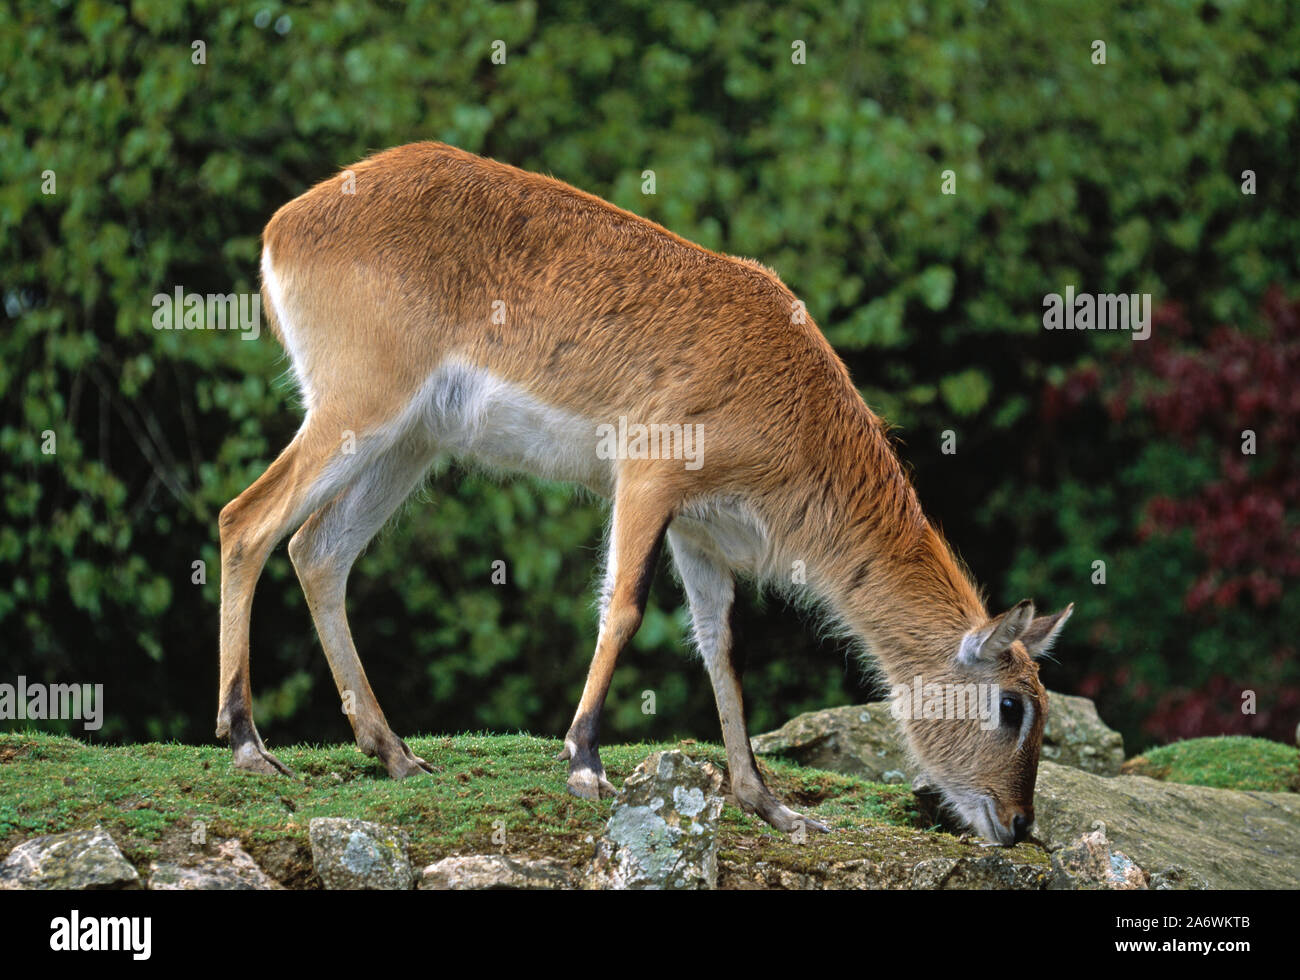 KAFUE LECHWE (Kobus leche kafuensis). Grazing. Herbivore. Captive animal. Stock Photo